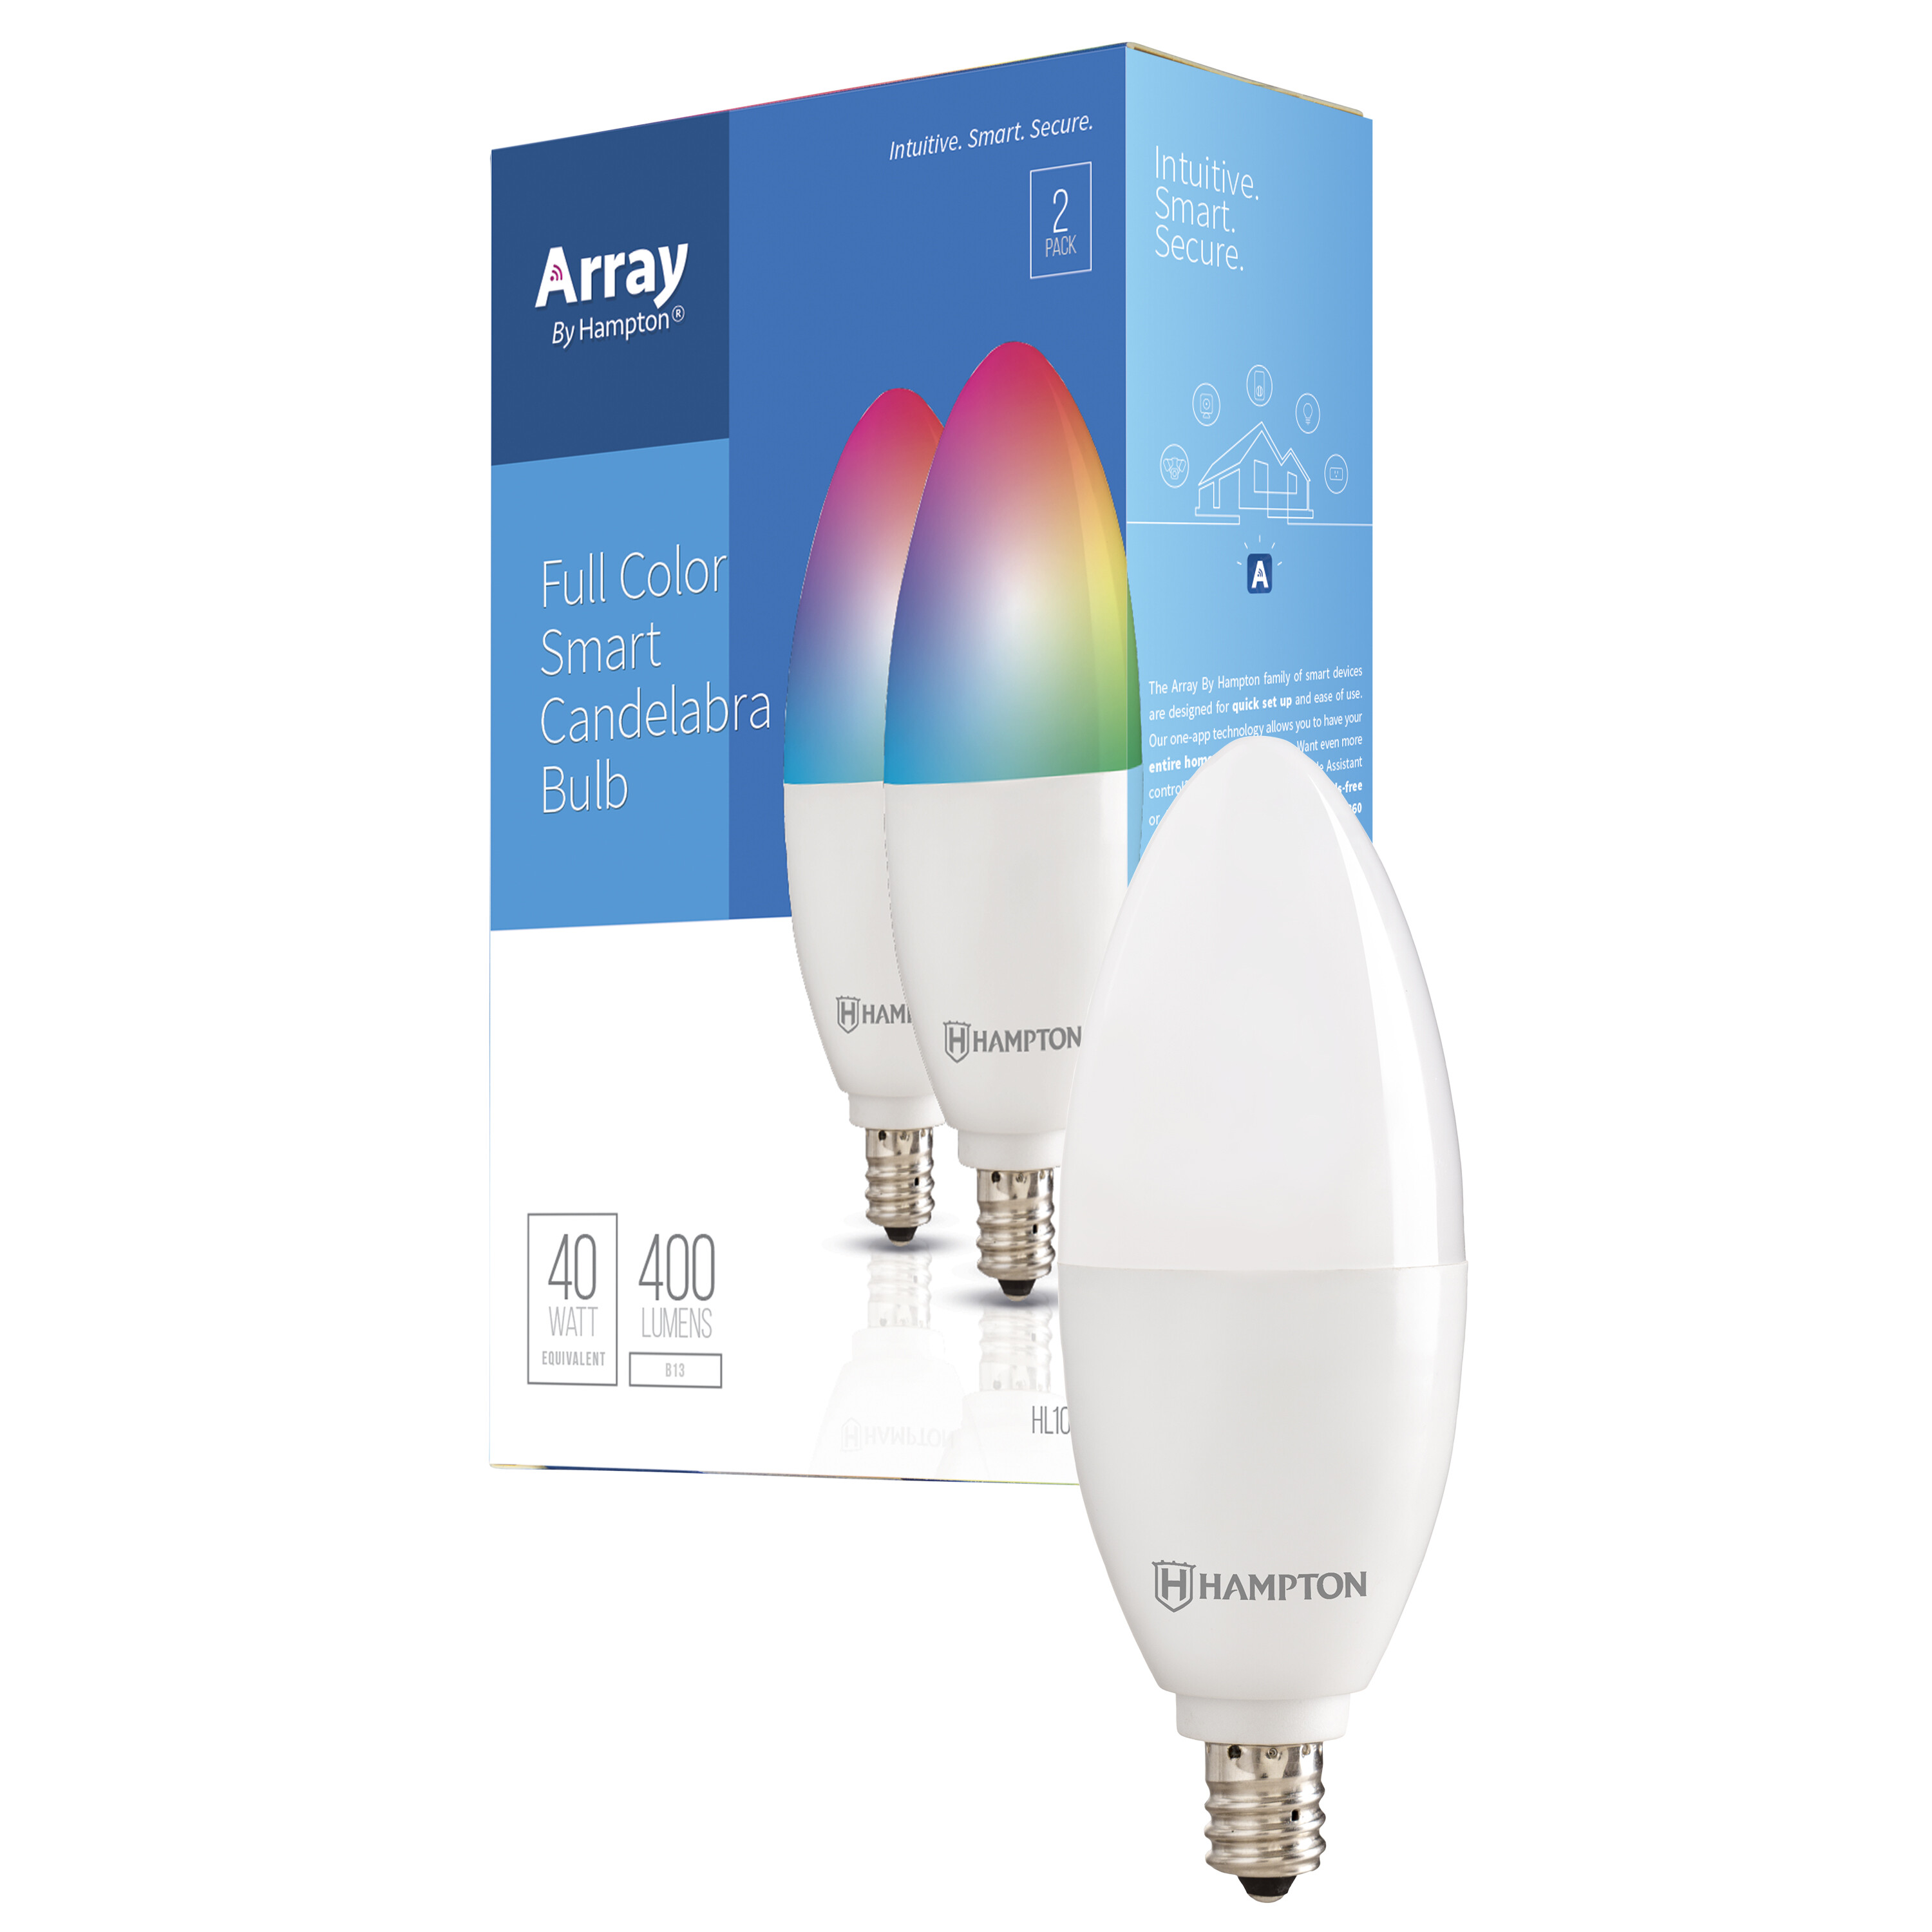 Full Color Smart Wi-Fi Candelabra Light Bulb